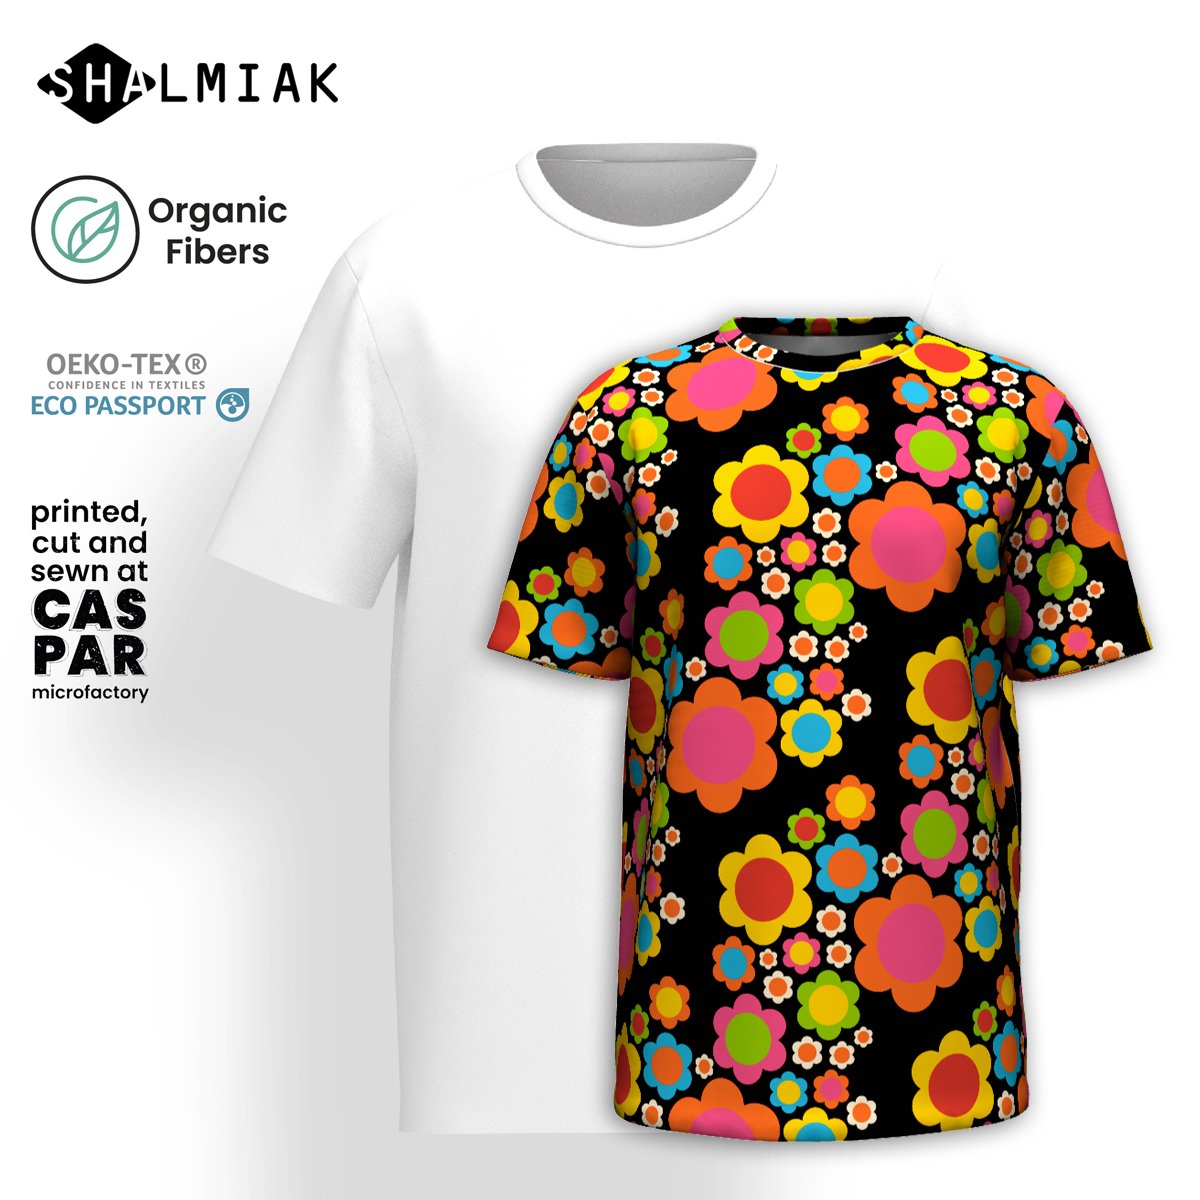 ELLIE MIX - T-shirt (organic cotton) - SHALMIAK